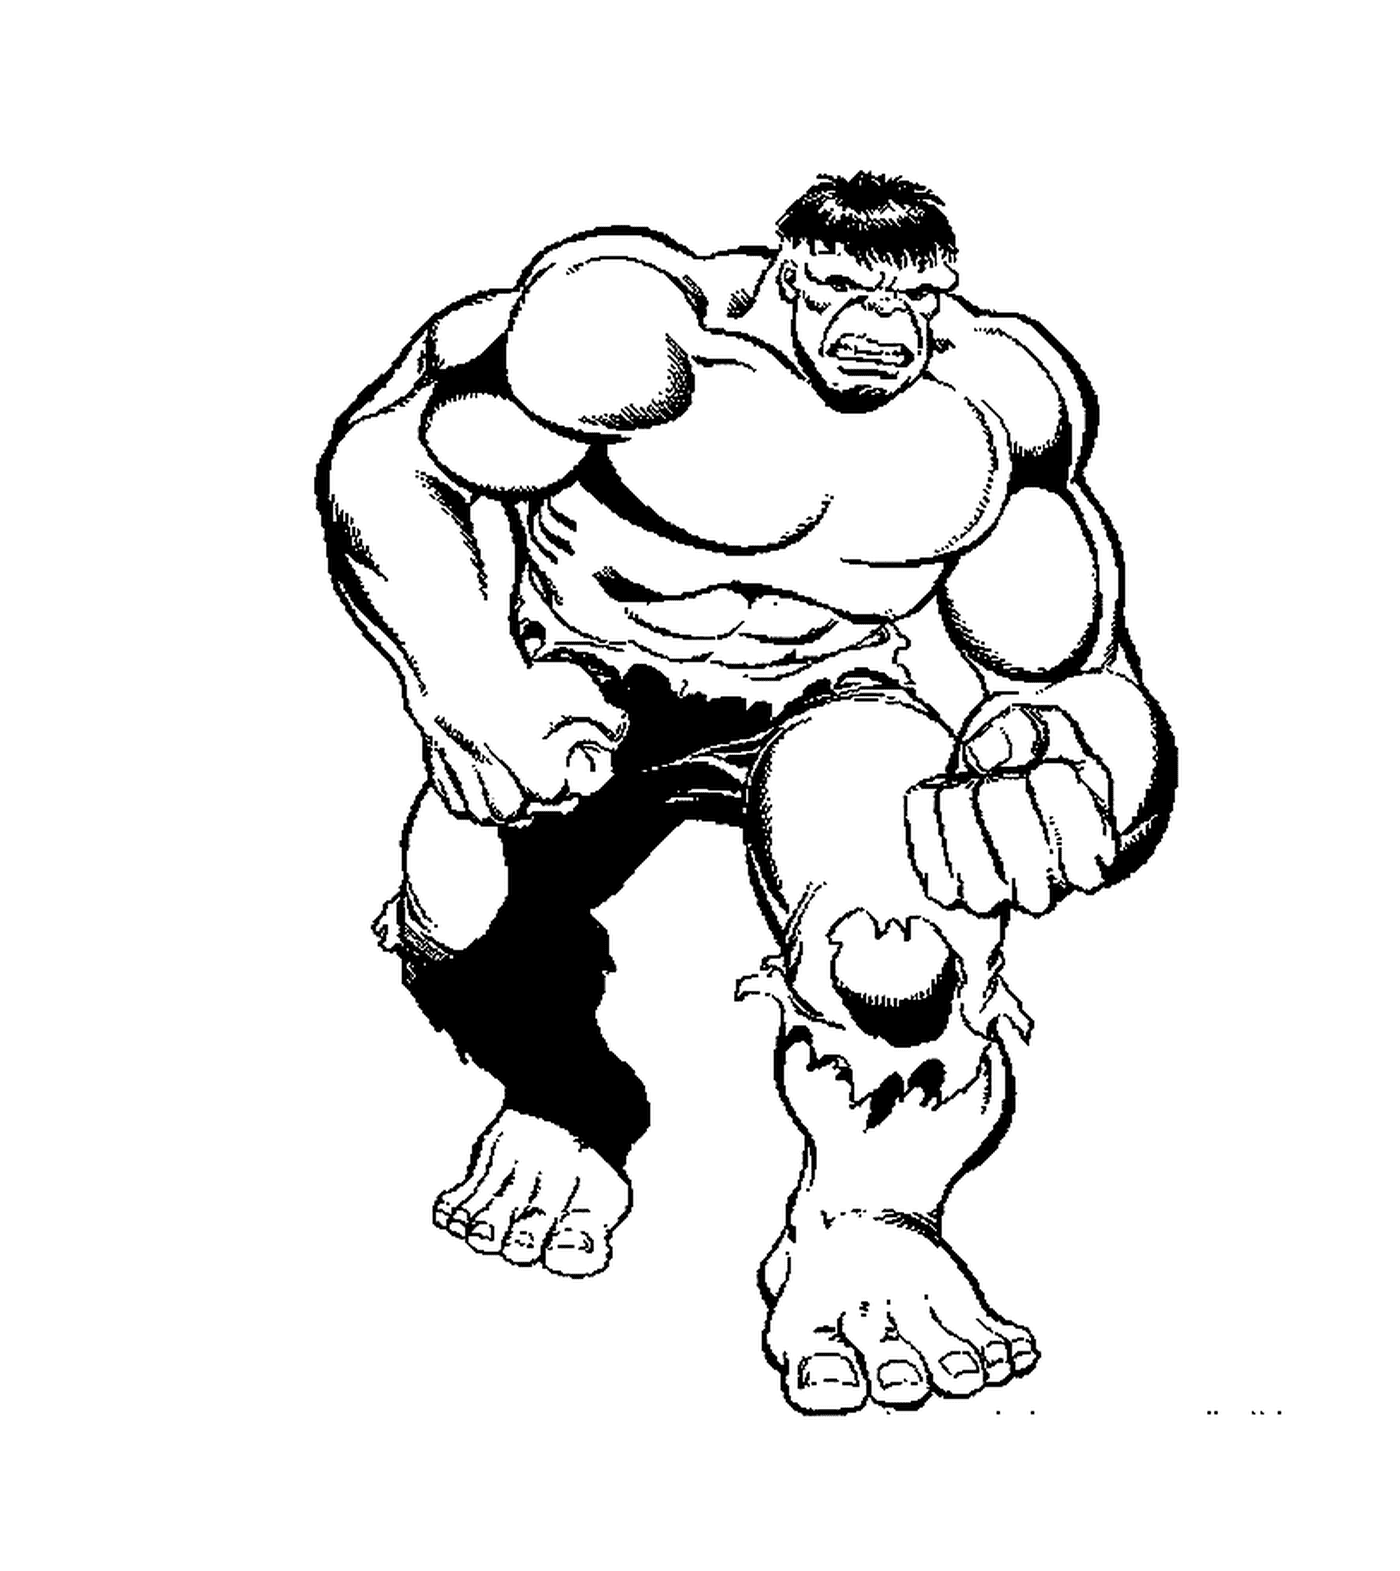   Hulk, version simple 